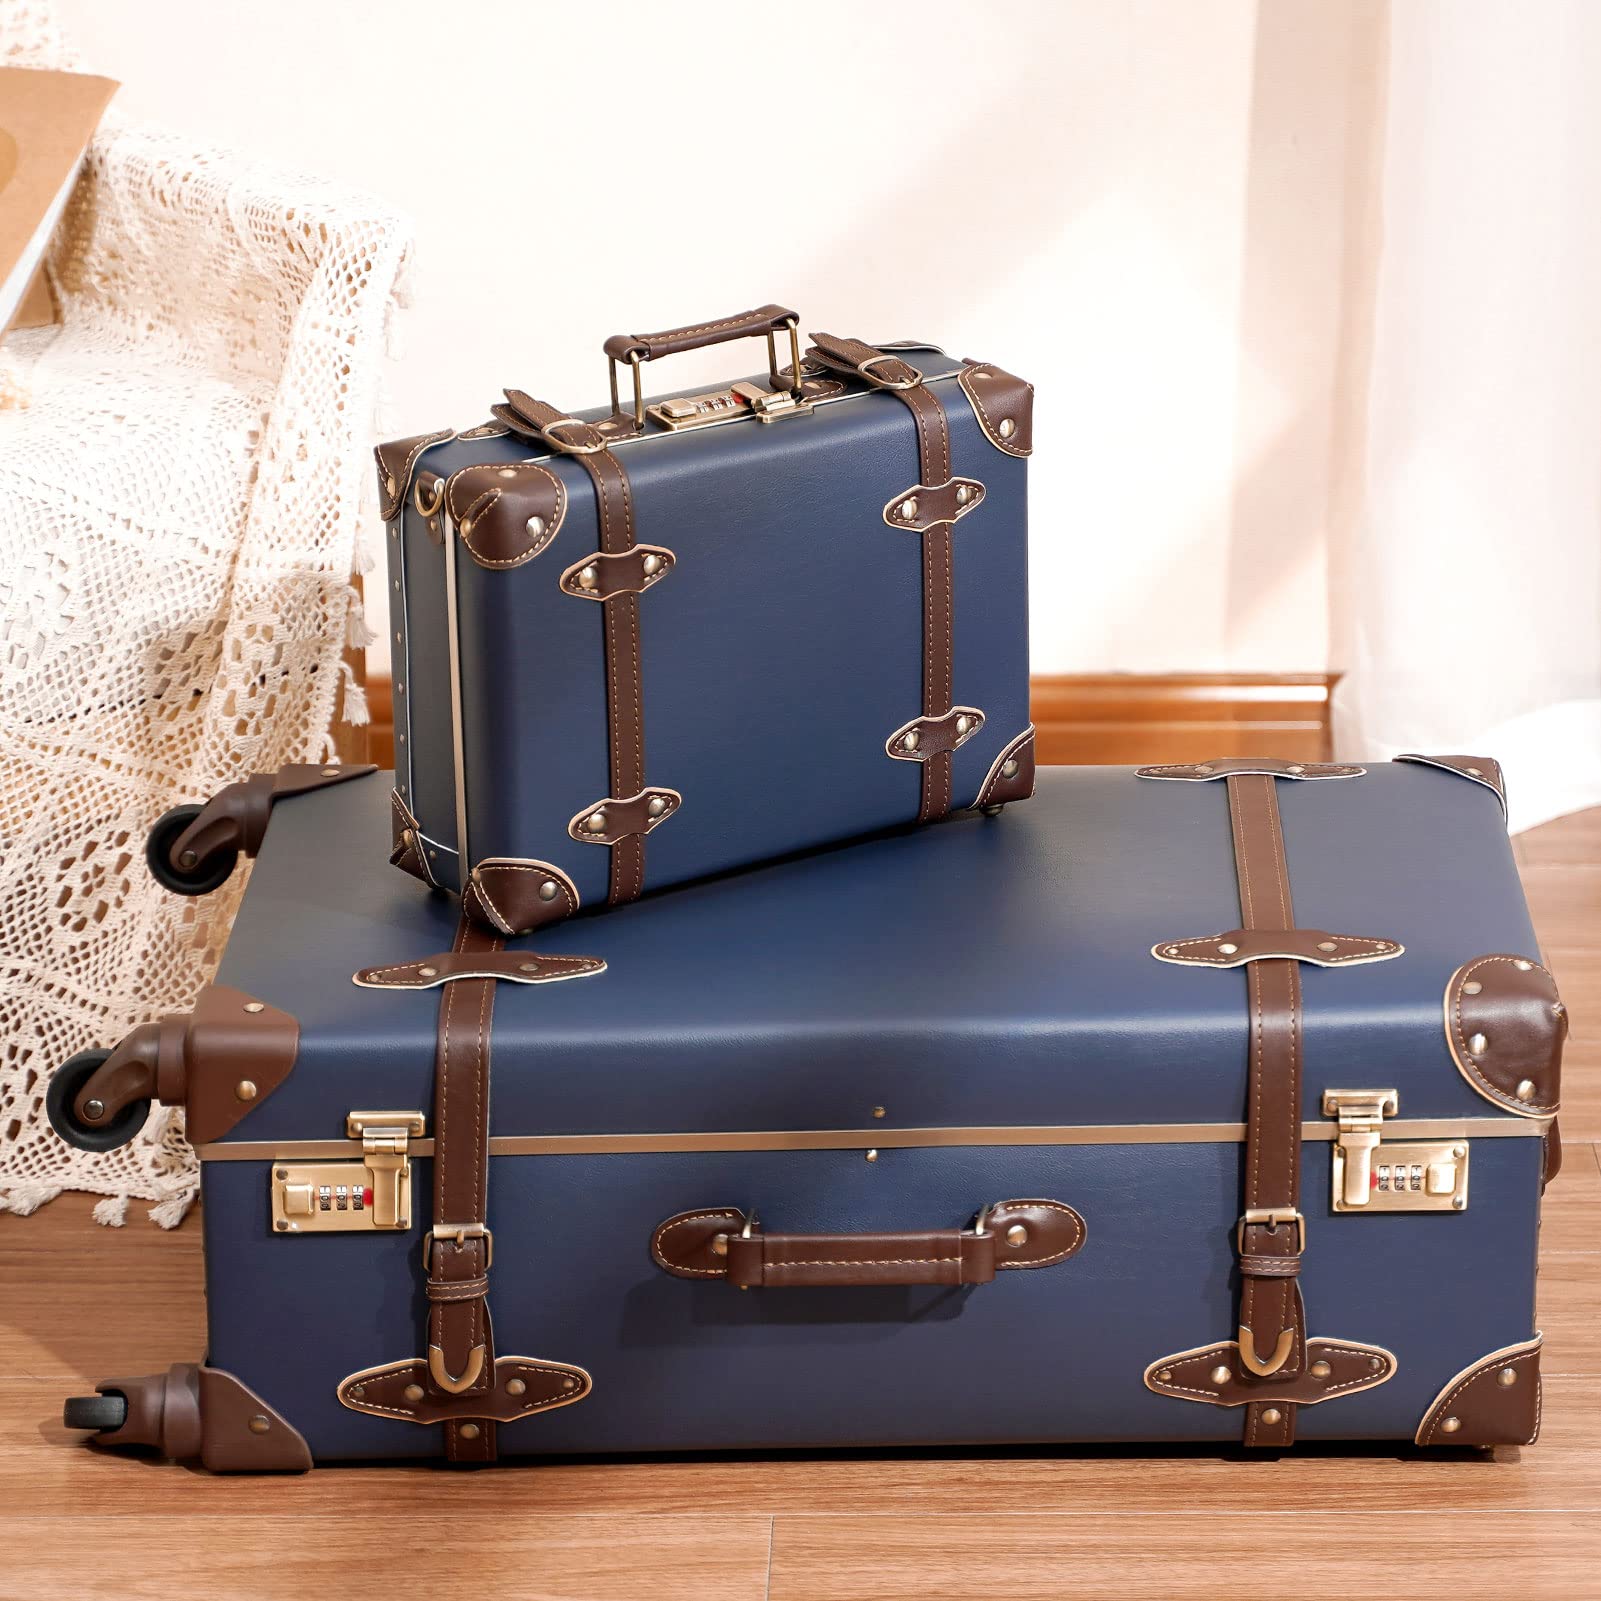 urecity vintage suitcase set for women, vintage luggage sets for women 2  piece, cute designer trunk luggage, retro suit case (Army Green, 20+12)